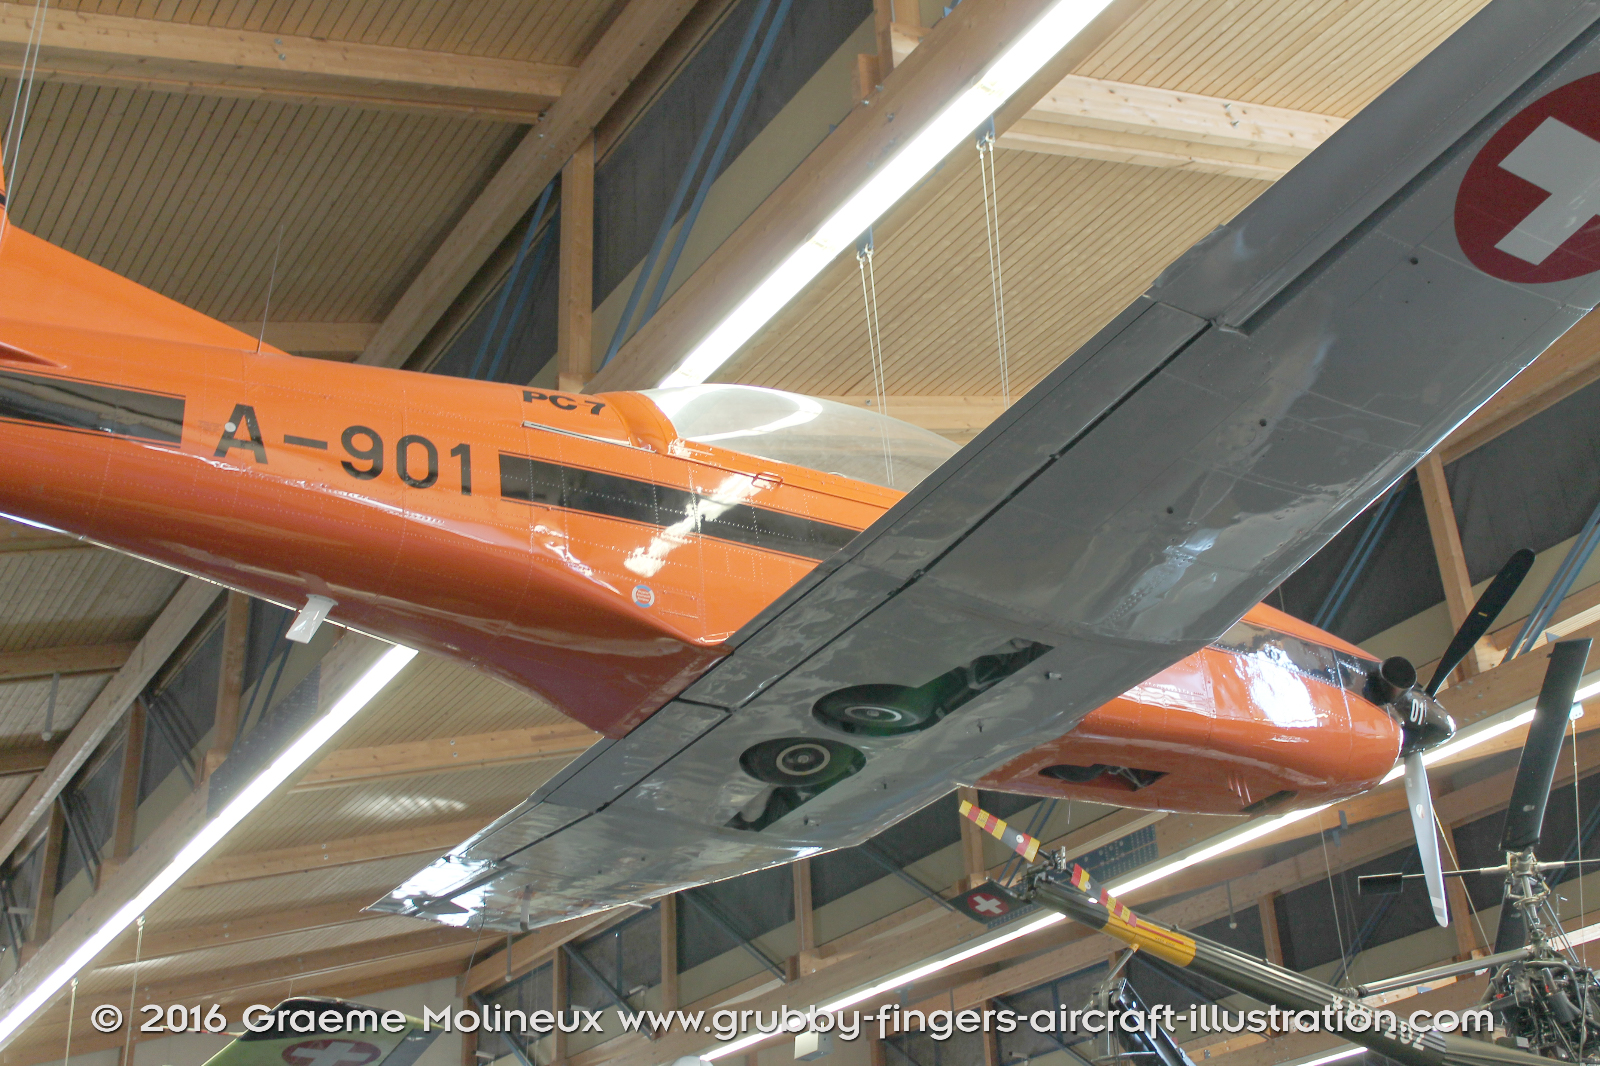 PILATUS_PC-7_A-901_Swiss_Air_Force_Museum_2015_13_GrubbyFingers